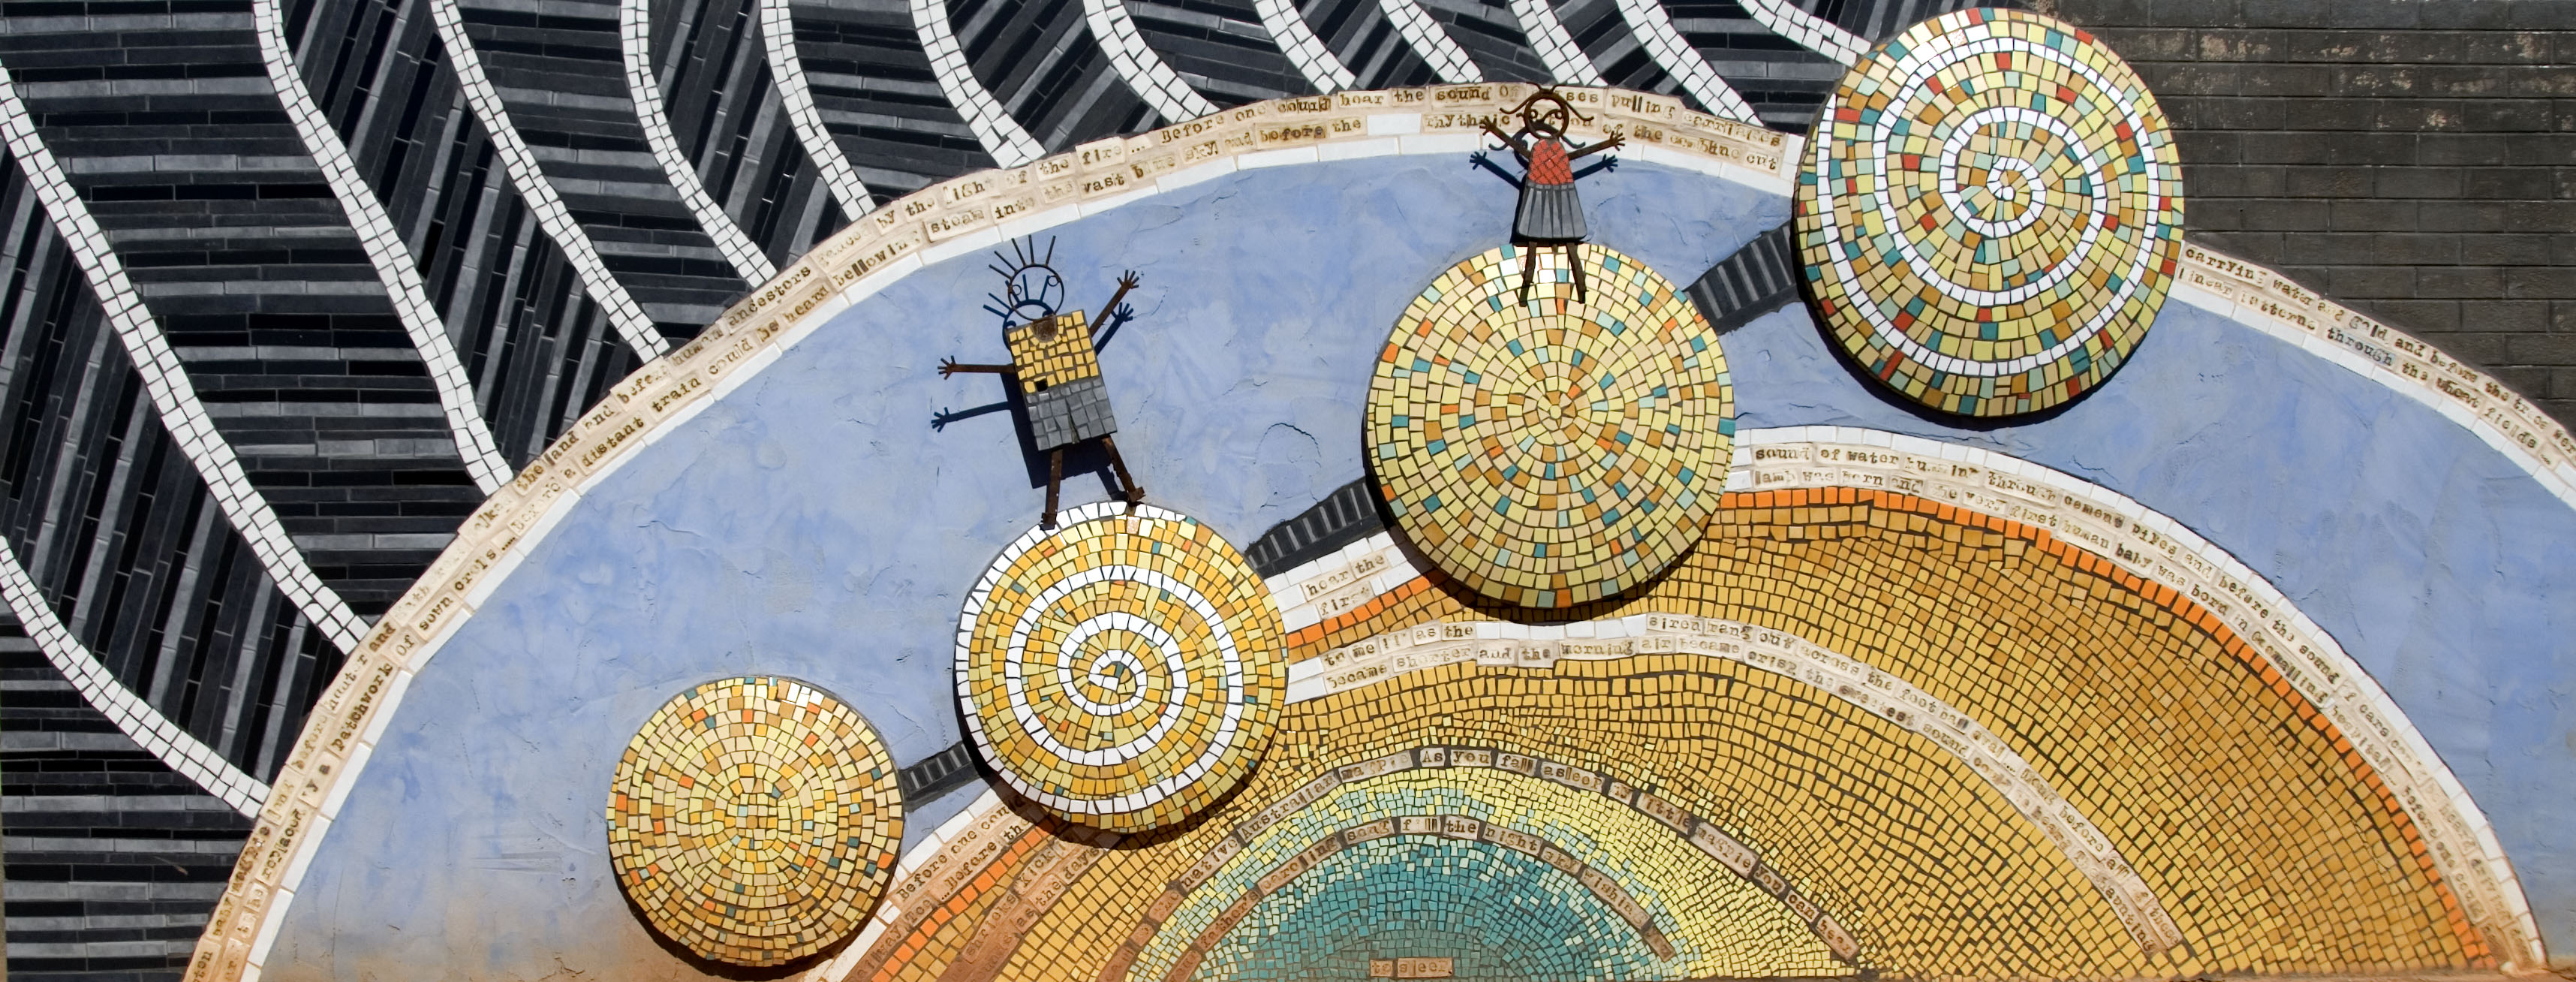 Mosaic at Goomalling Primary School, Western Australia